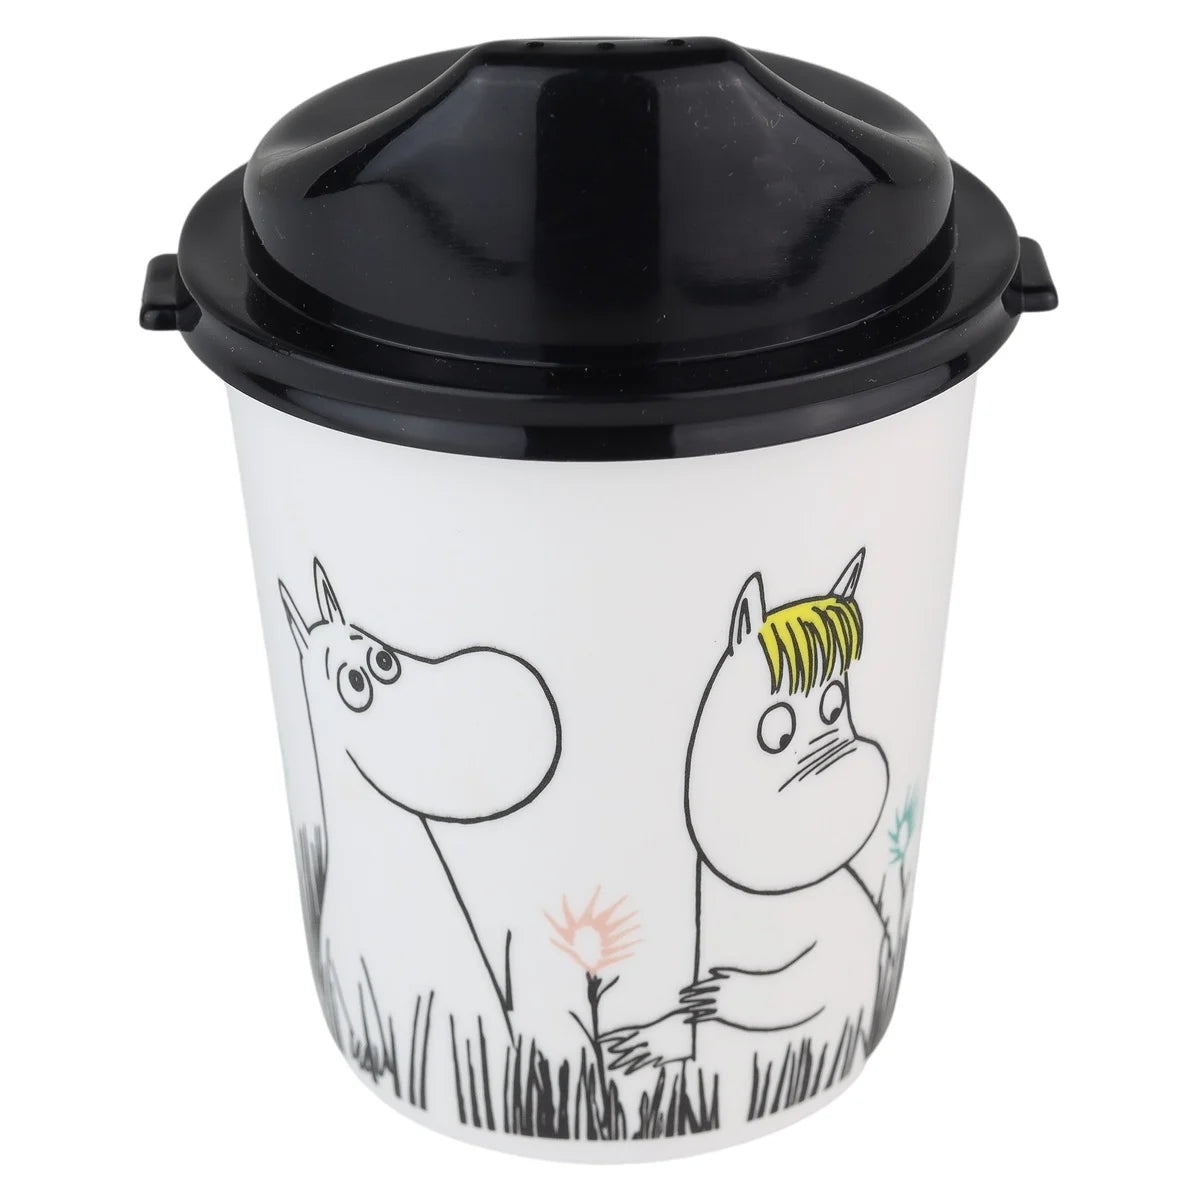 Moomin Jungle, Tumbler mug with spout lid